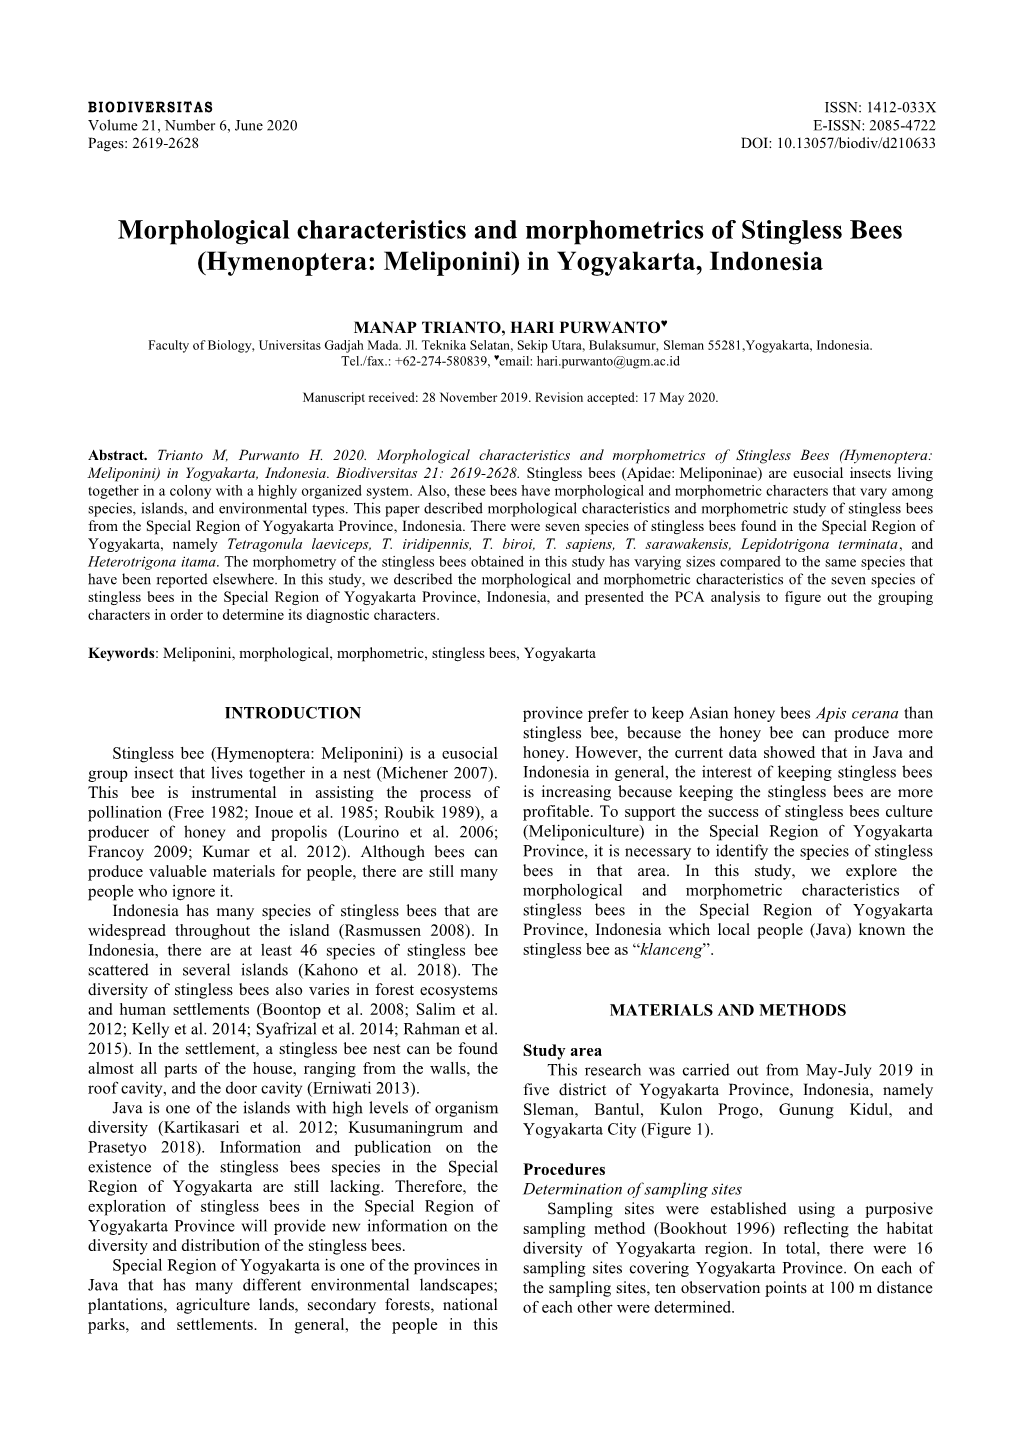 Morphological Characteristics and Morphometrics of Stingless Bees (Hymenoptera: Meliponini) in Yogyakarta, Indonesia